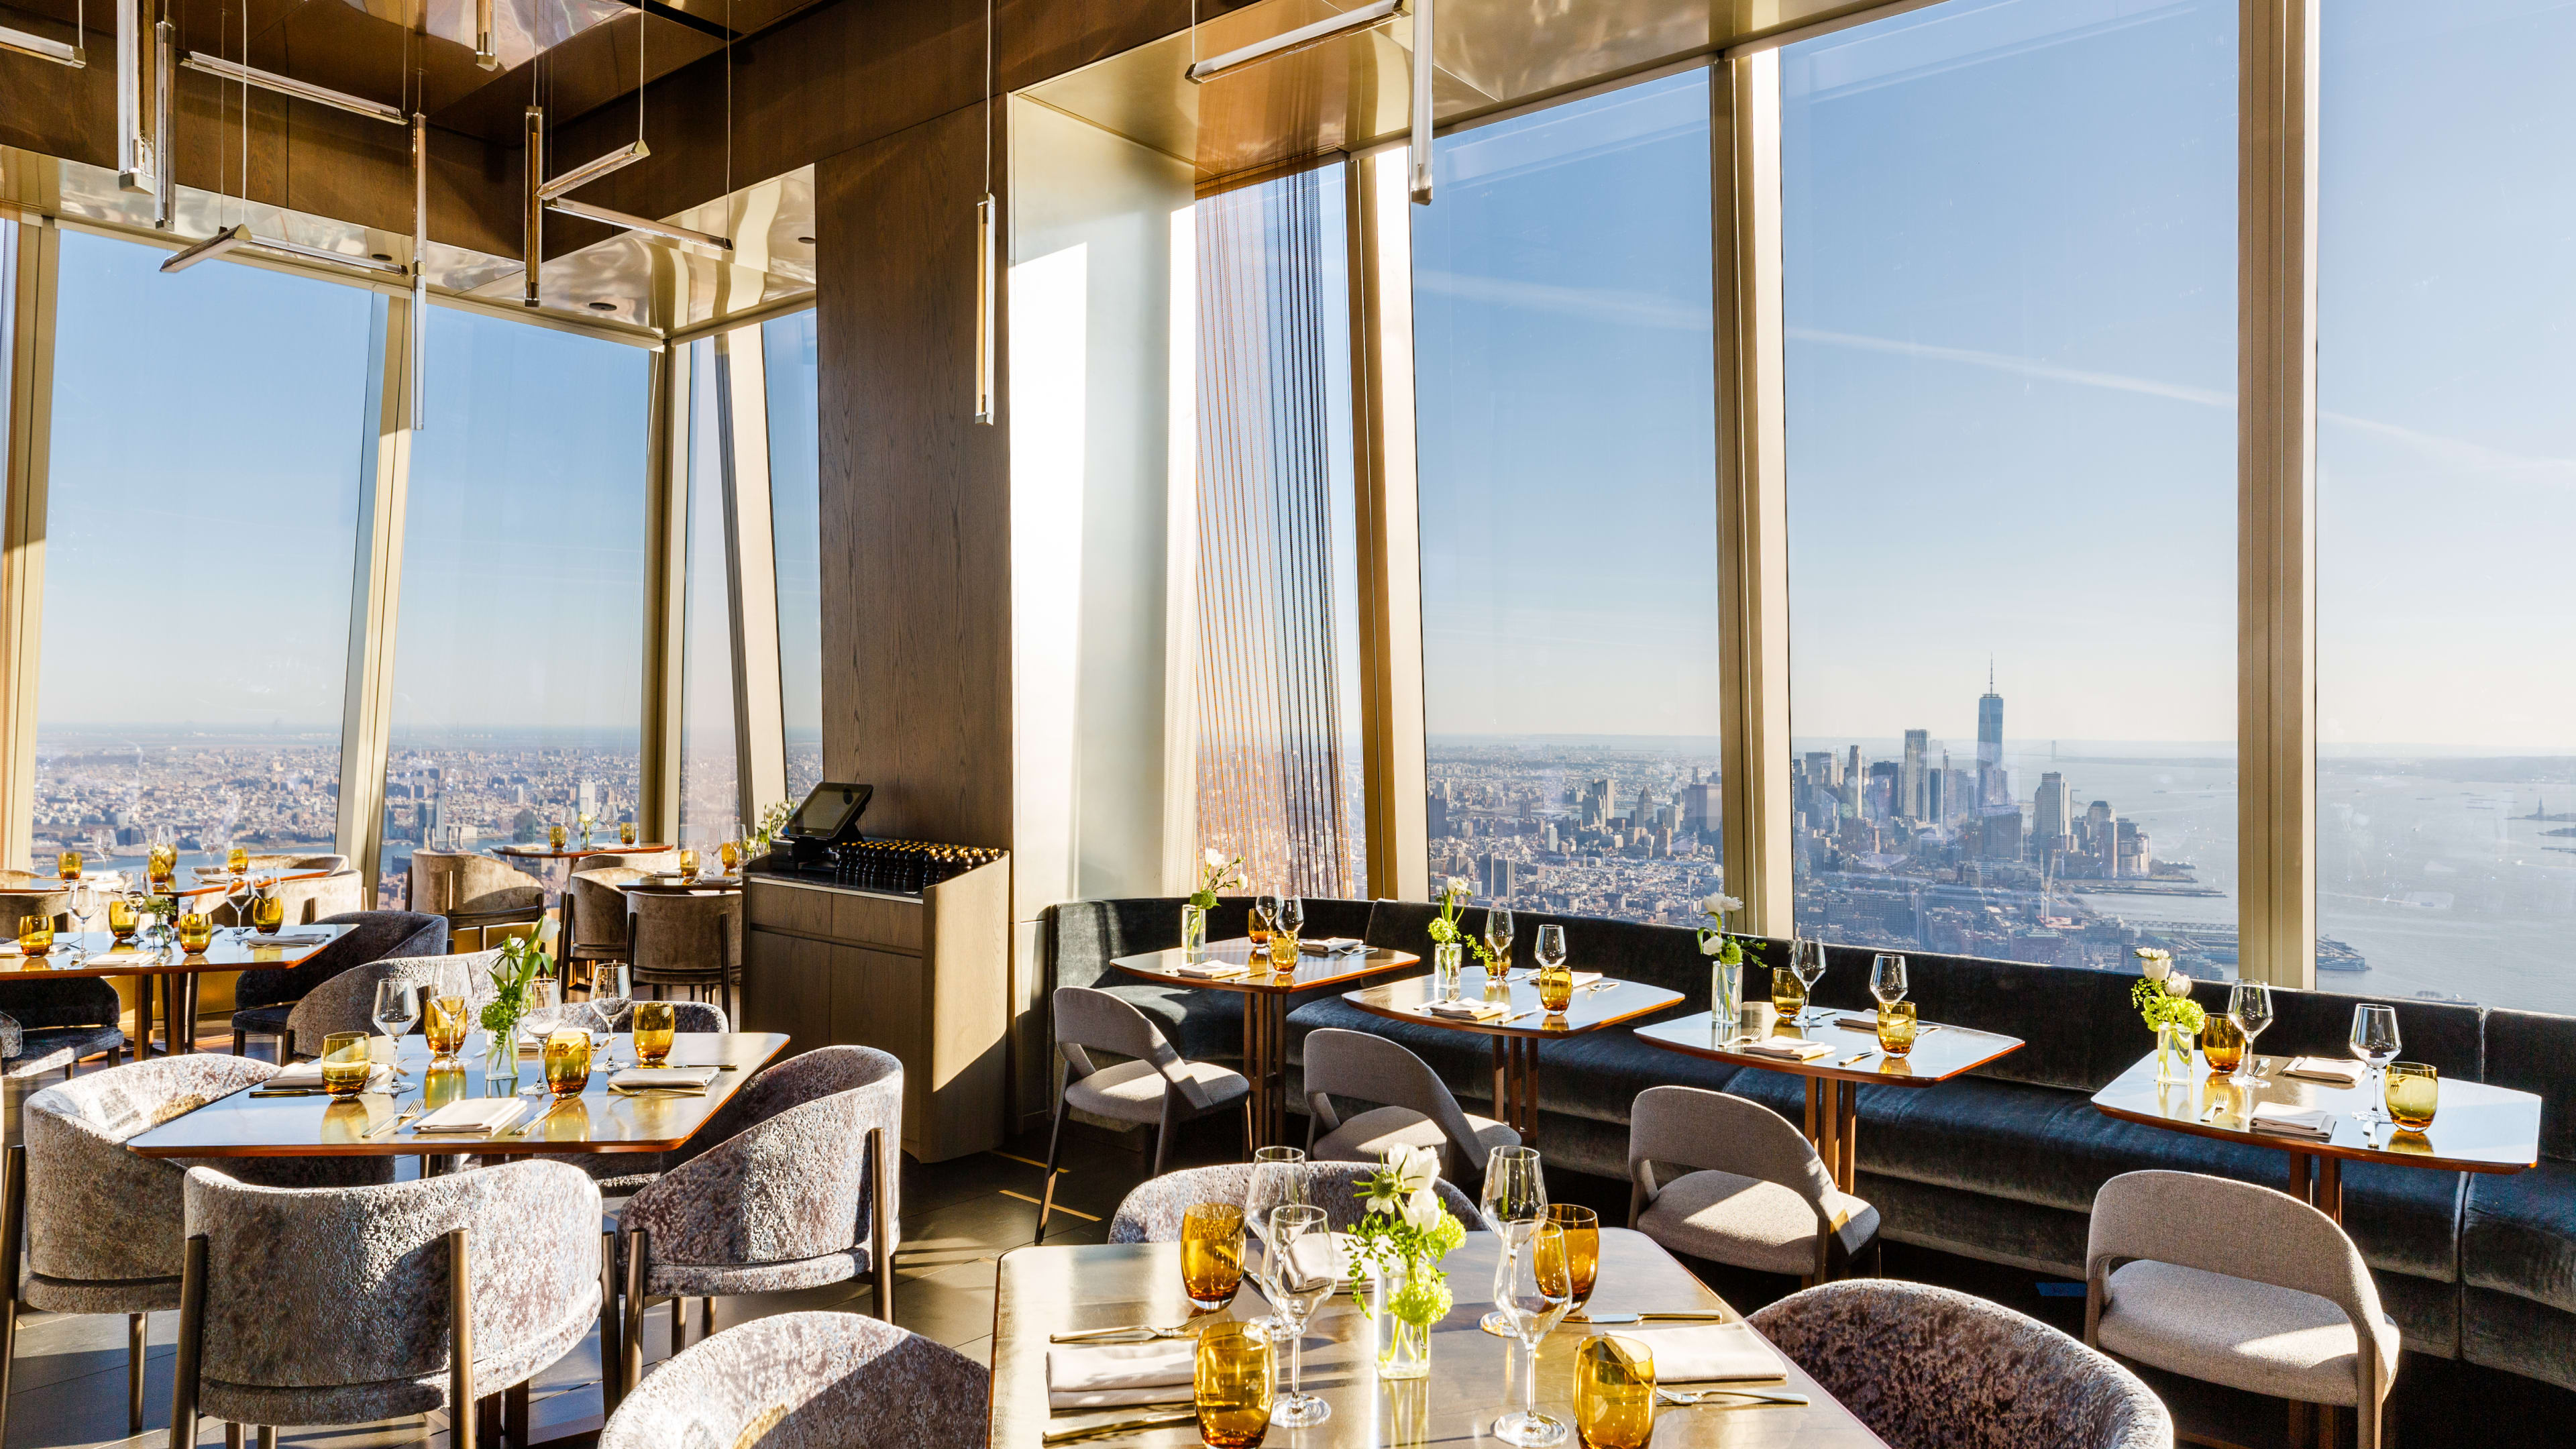 The Best Rooftop Restaurants In NYC image